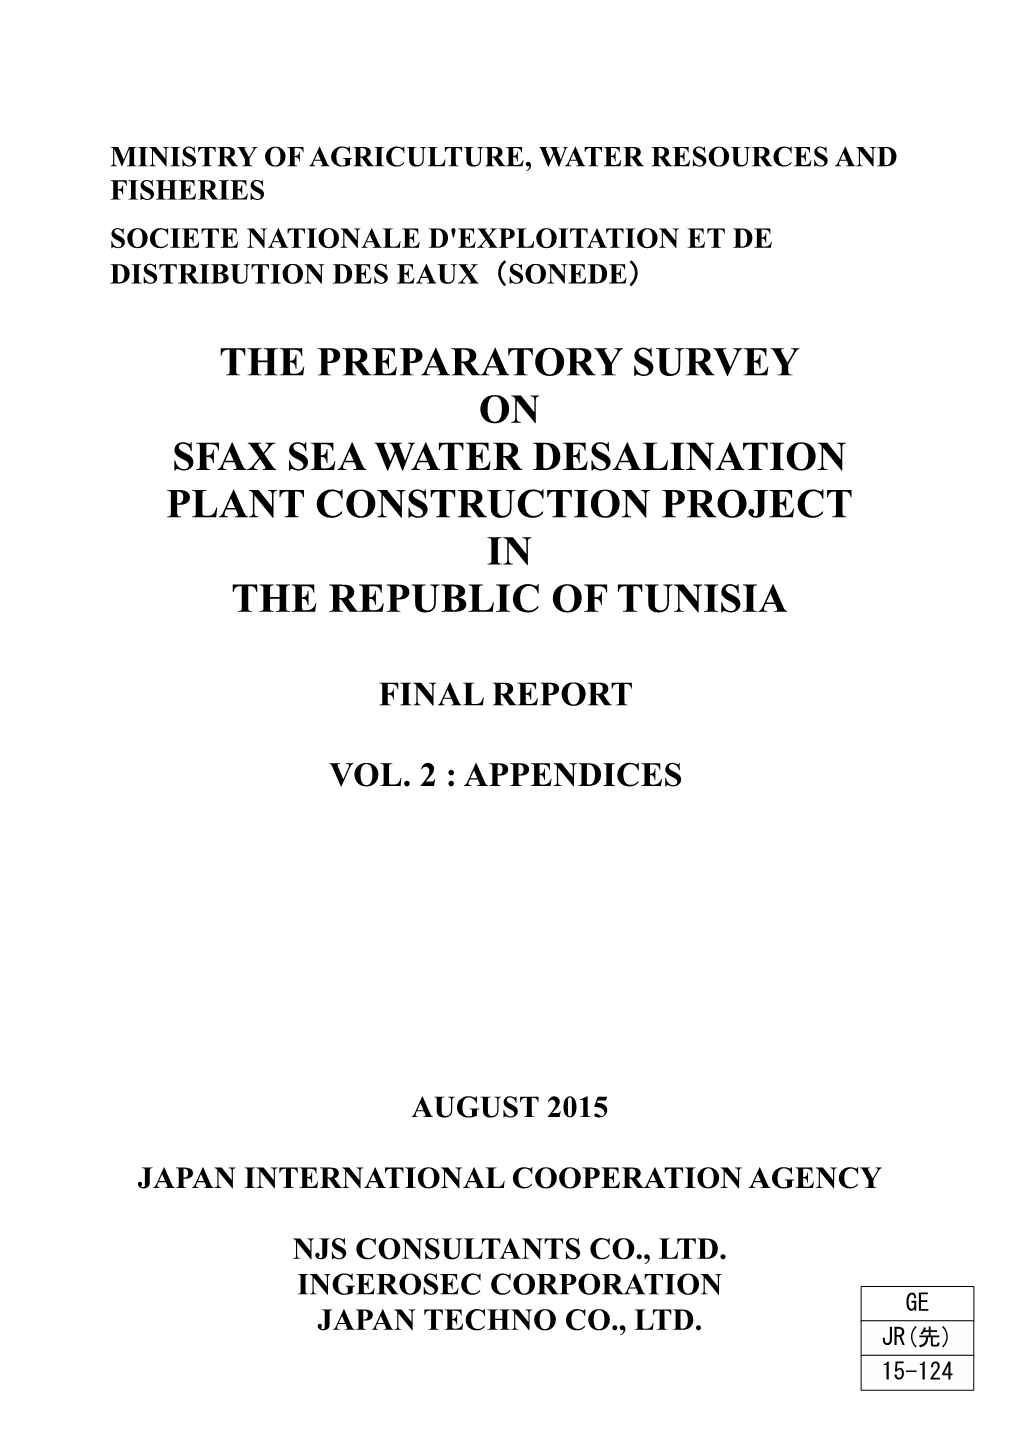 The Preparatory Survey on Sfax Sea Water Desalination Plant Construction Project in the Republic of Tunisia